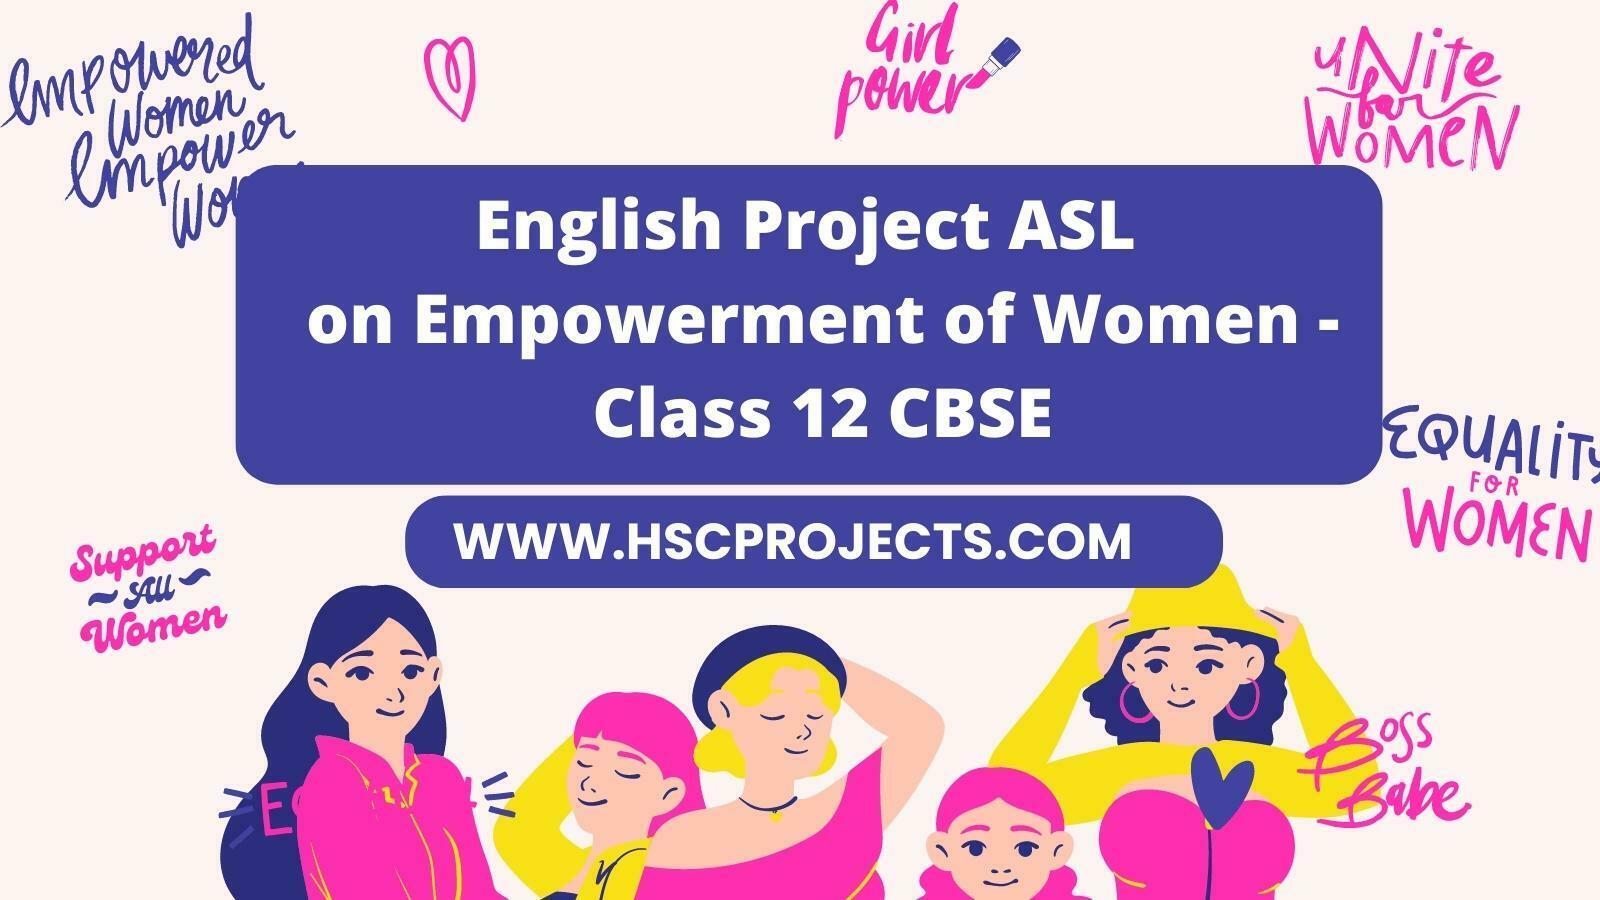 English Project ASL on Empowerment of Women - Class 12 CBSE